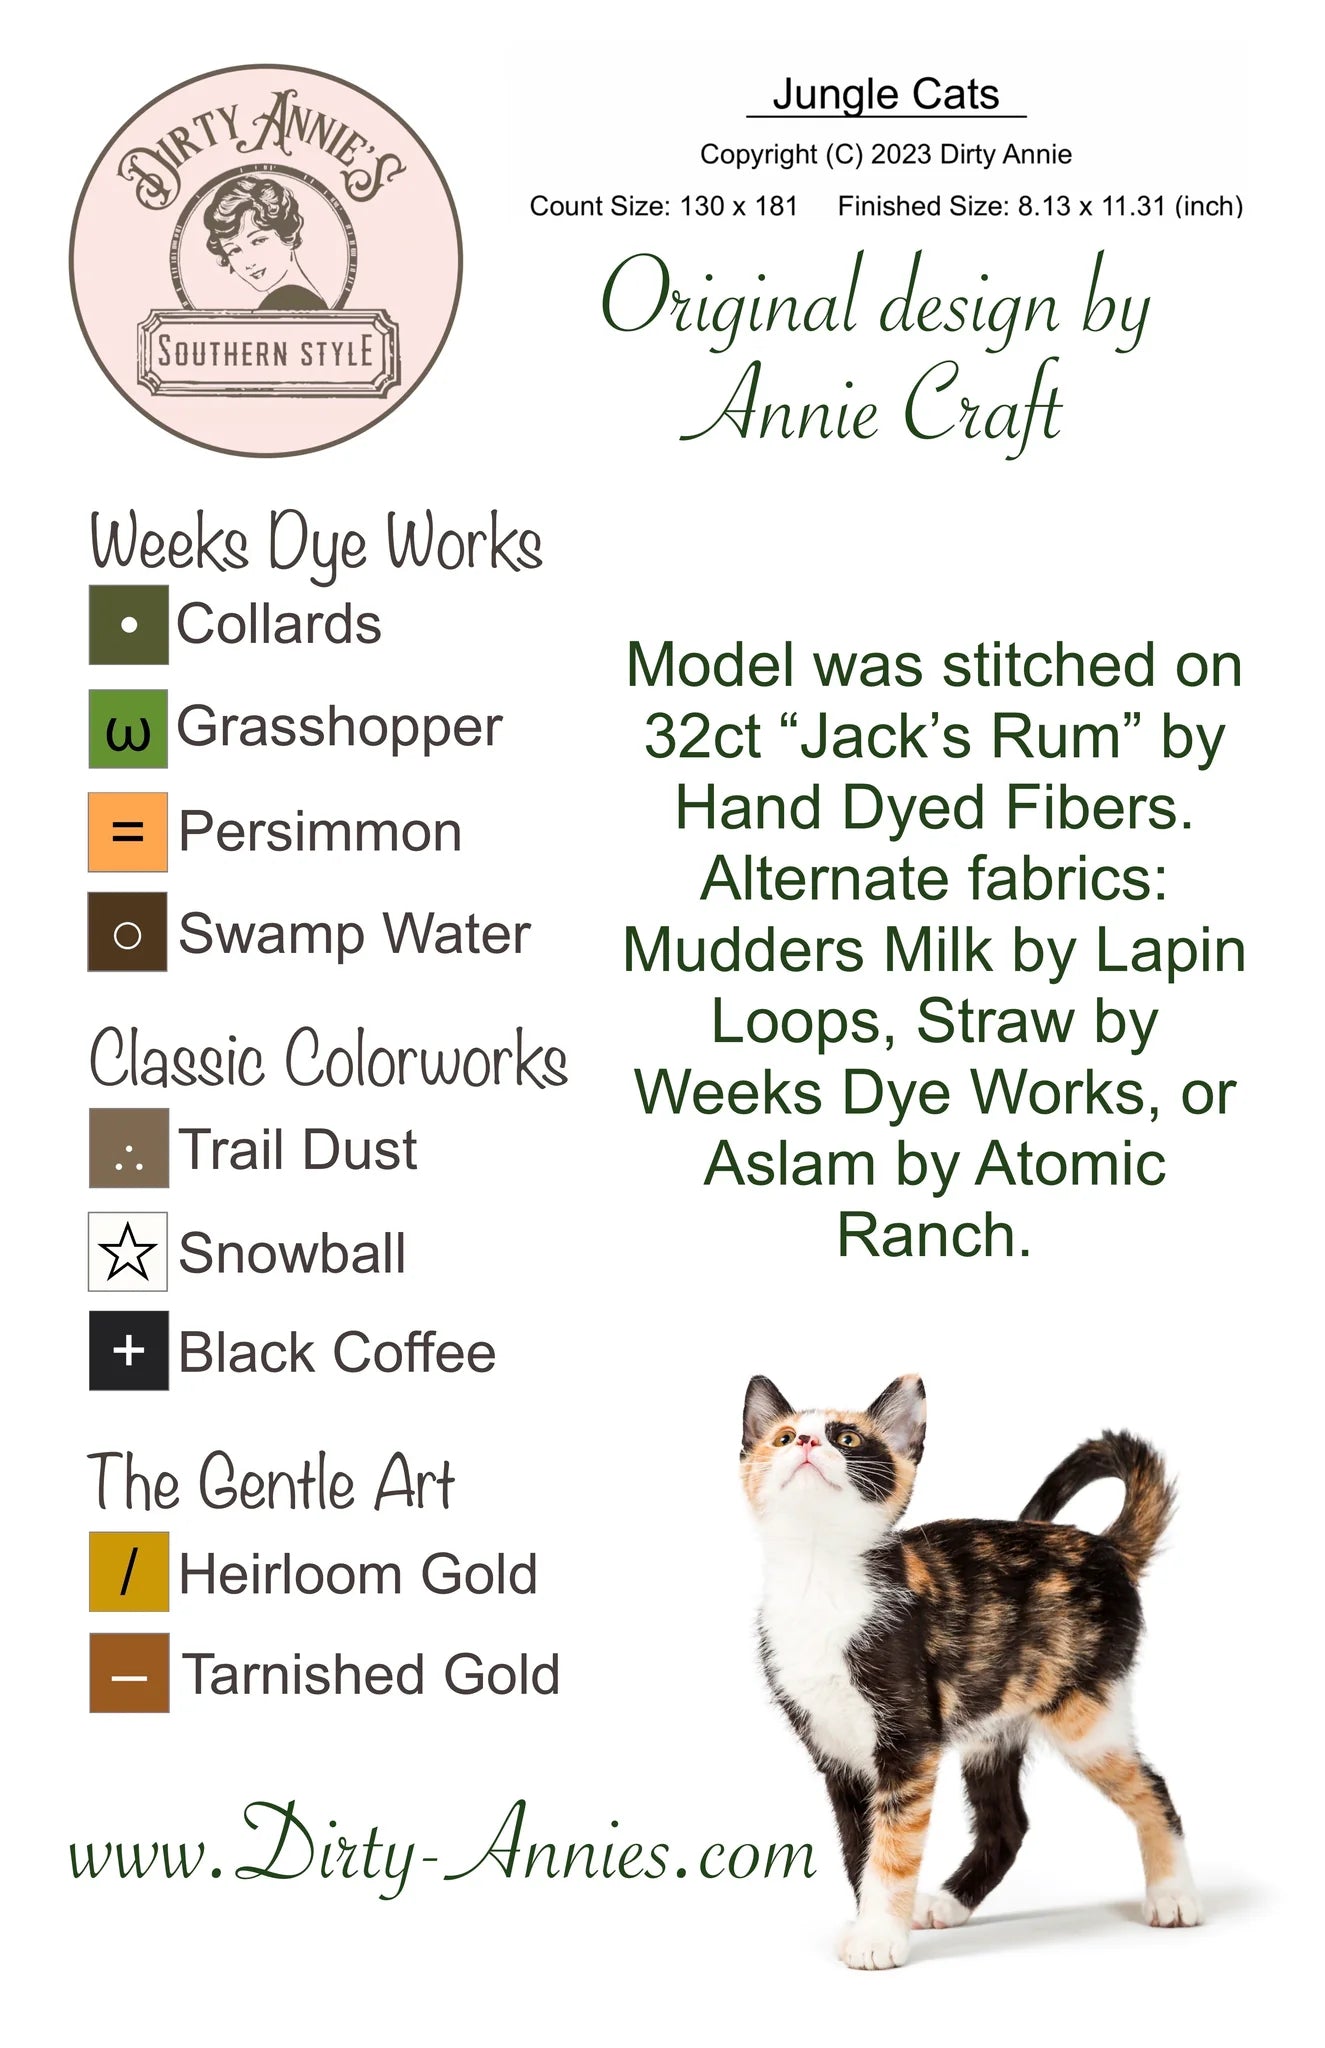 Nashville Market - Jungle Cats - Dirty Annie's - Cross Stitch Pattern